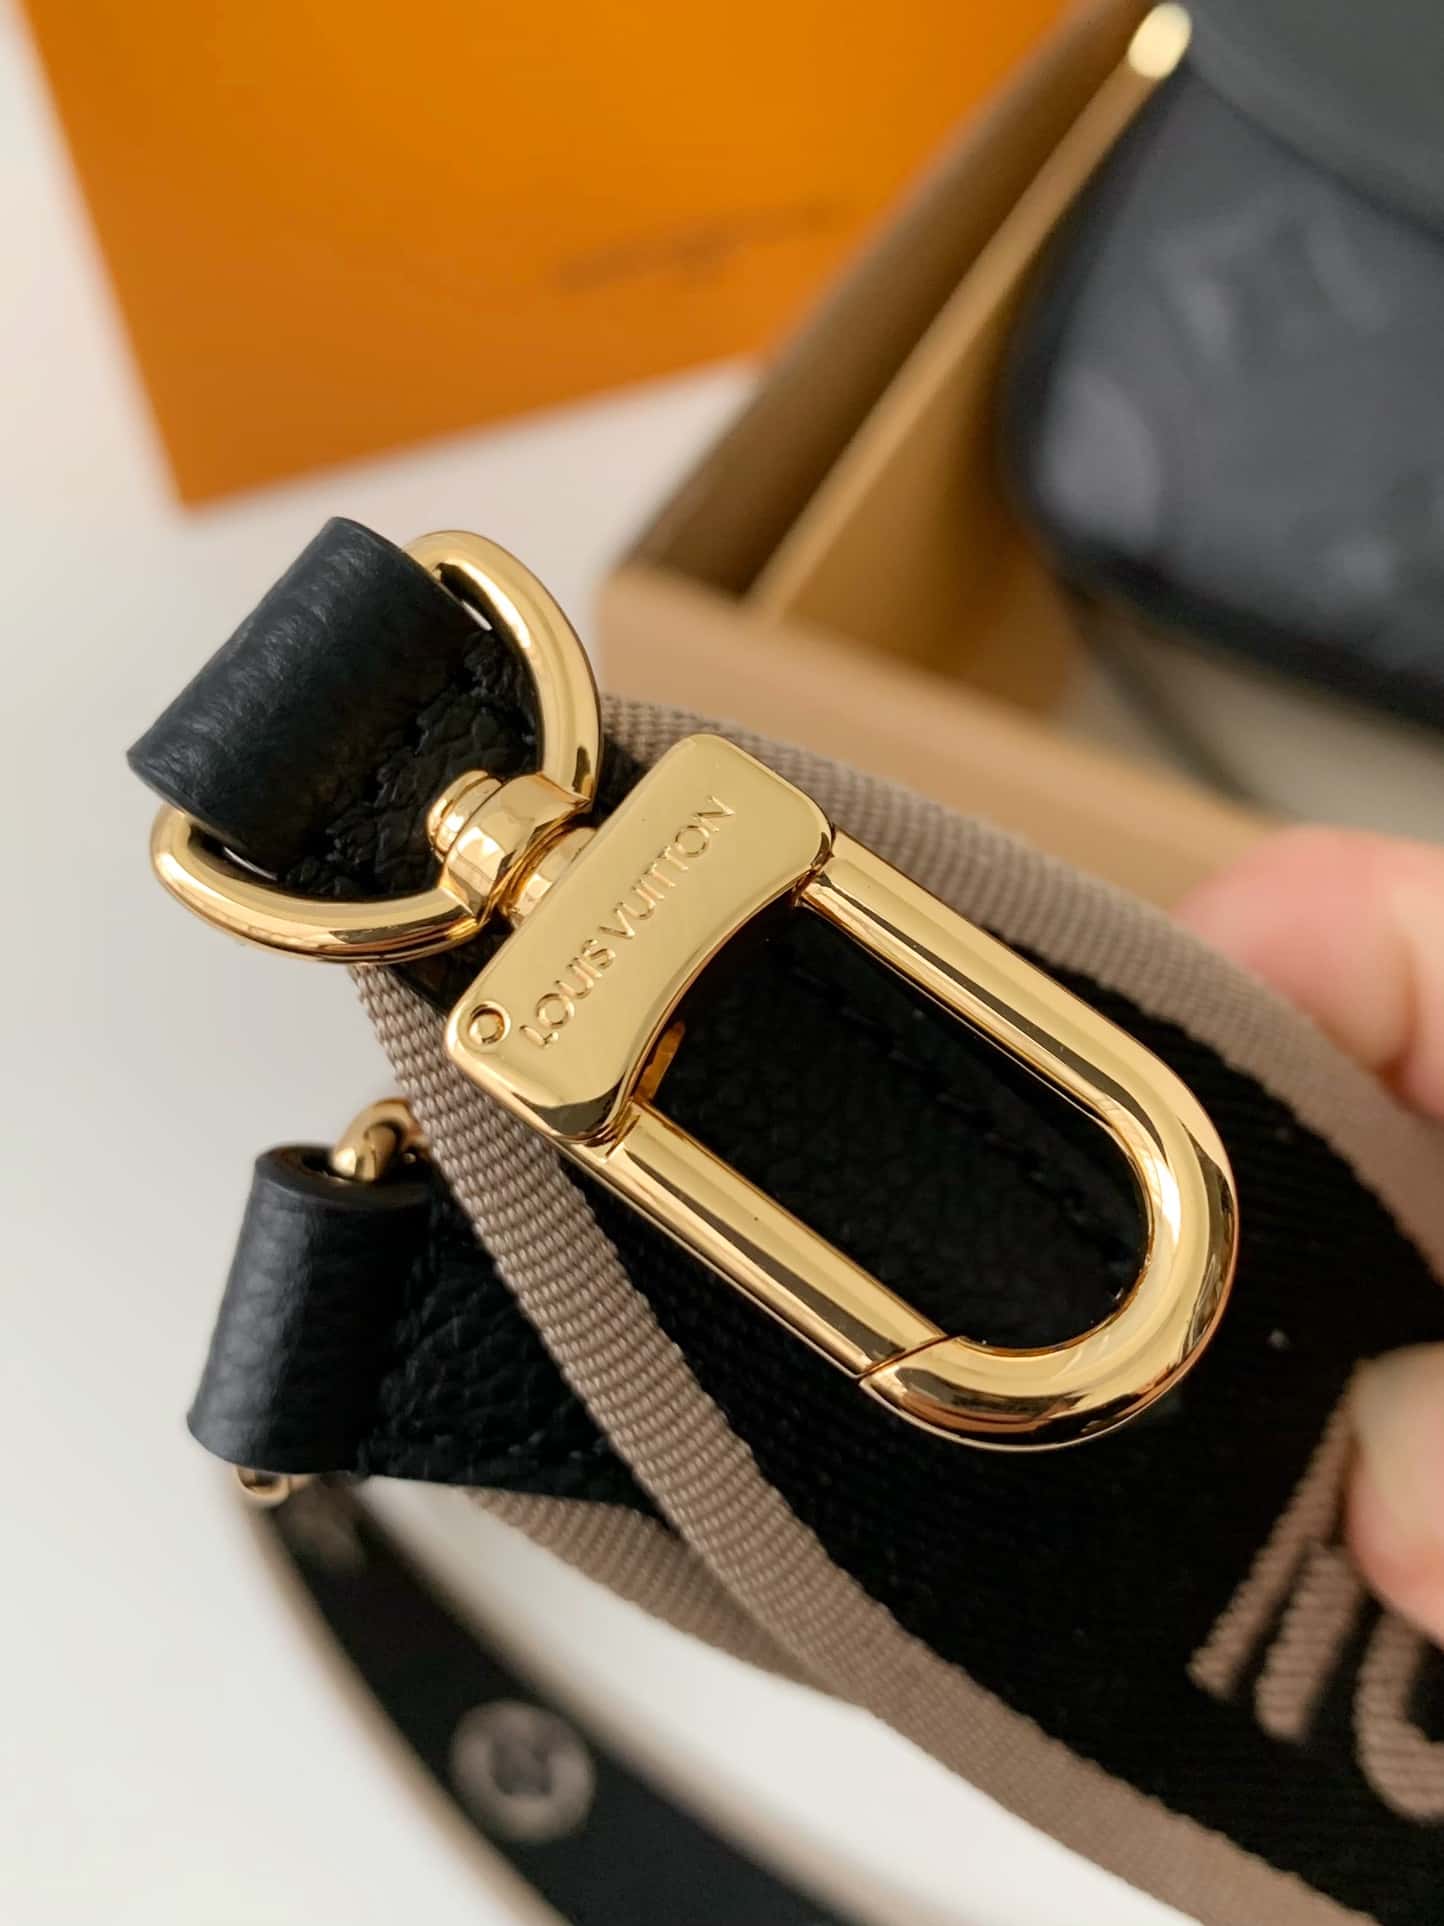 Monogram Louis Vuitton Diane strap options : r/handbags